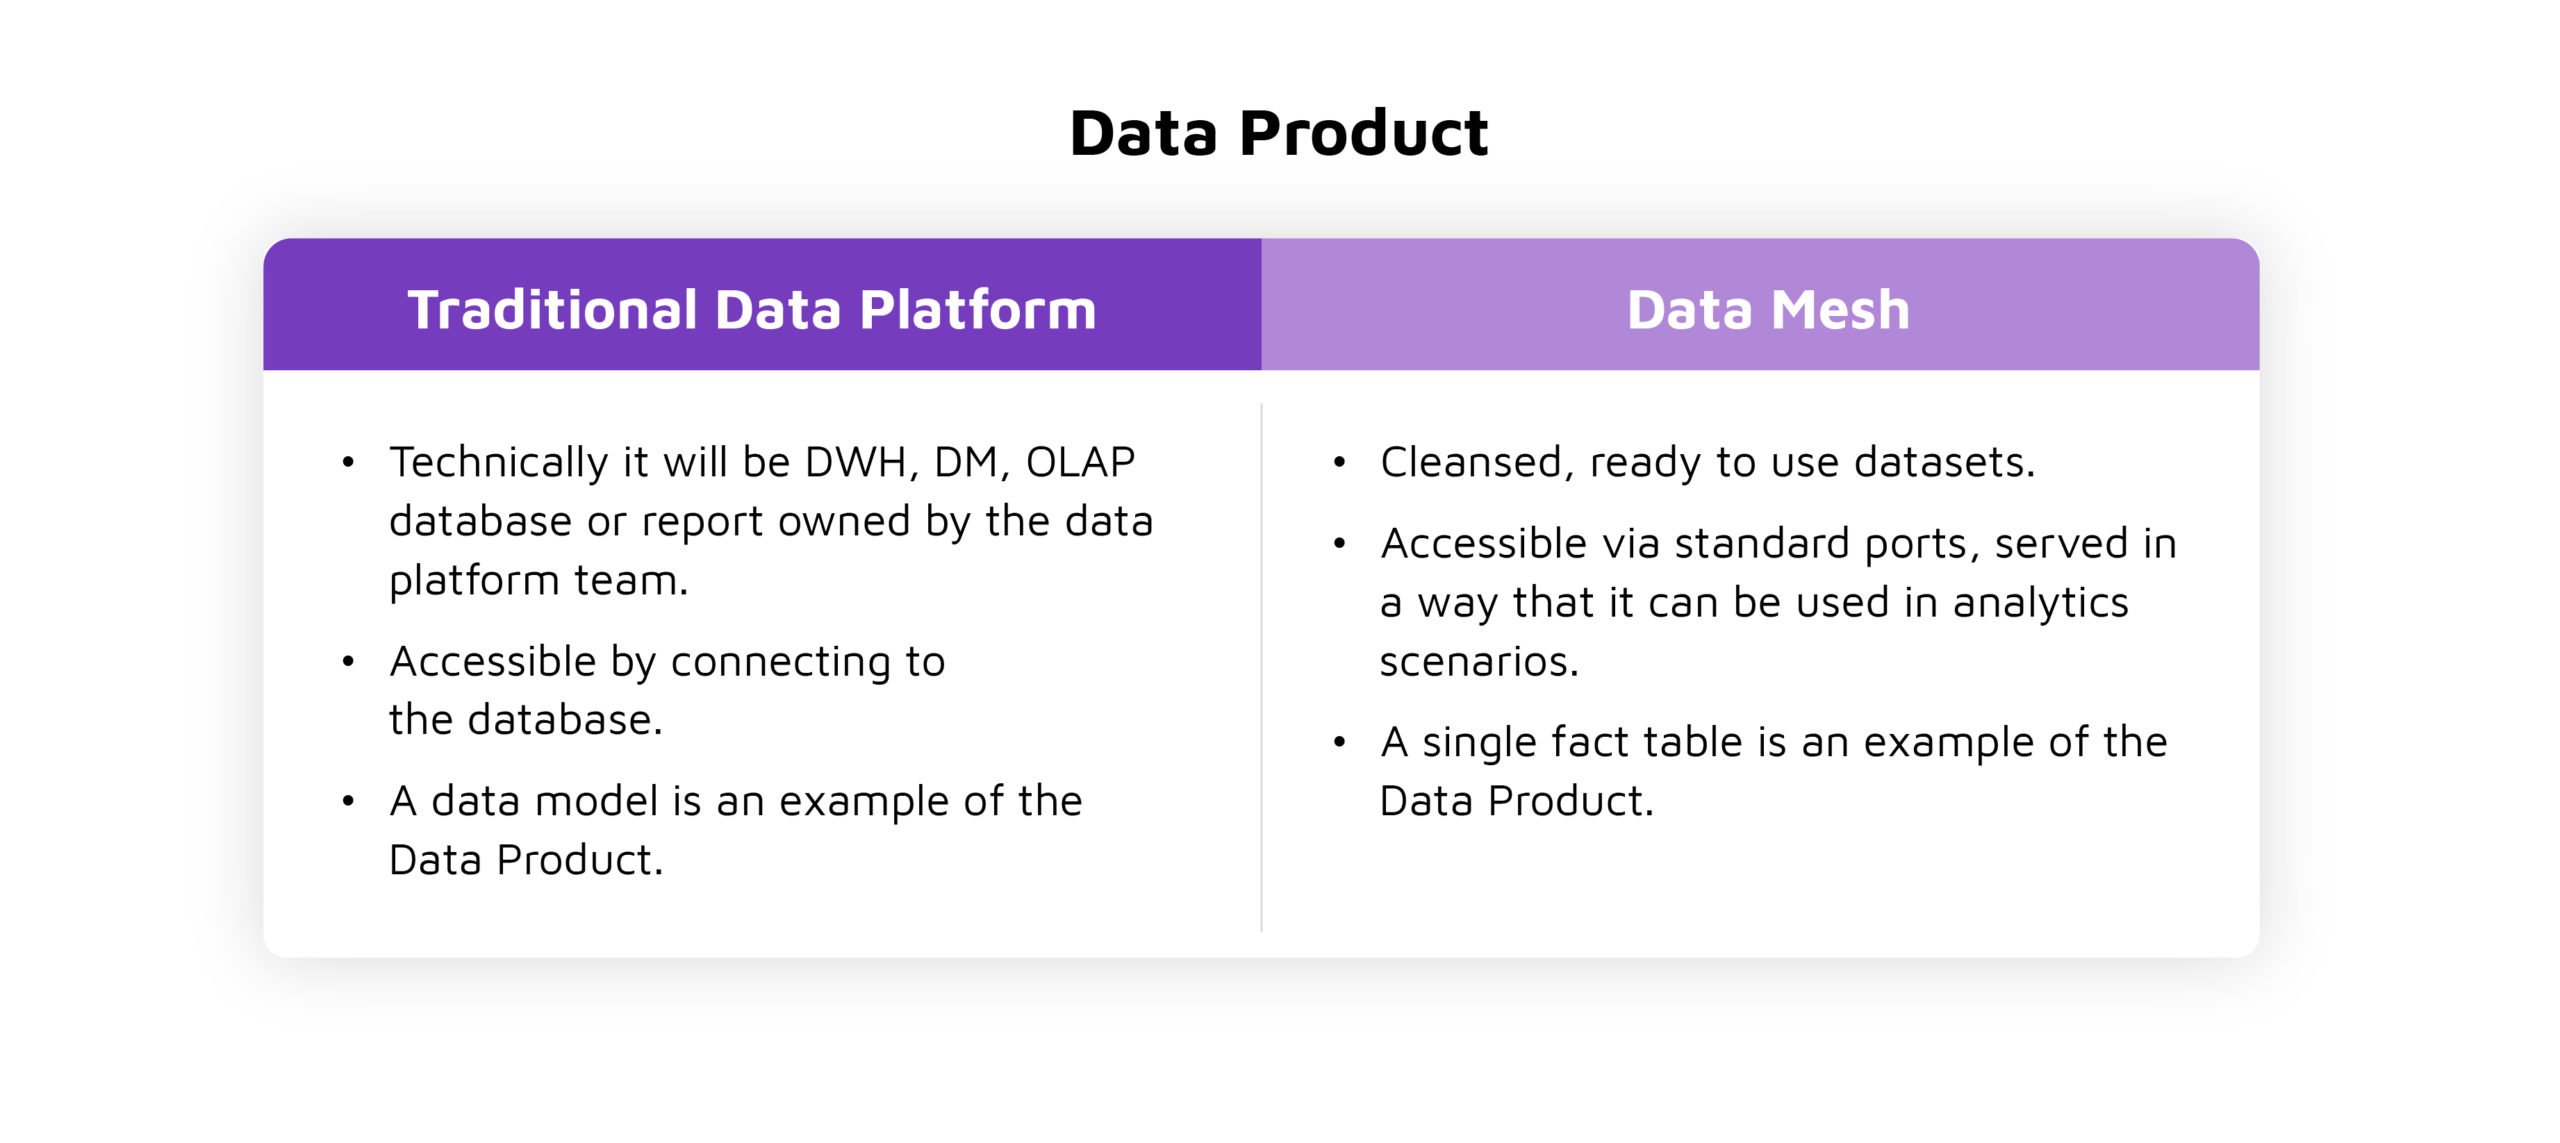 comparing data mesh to traditional data platform